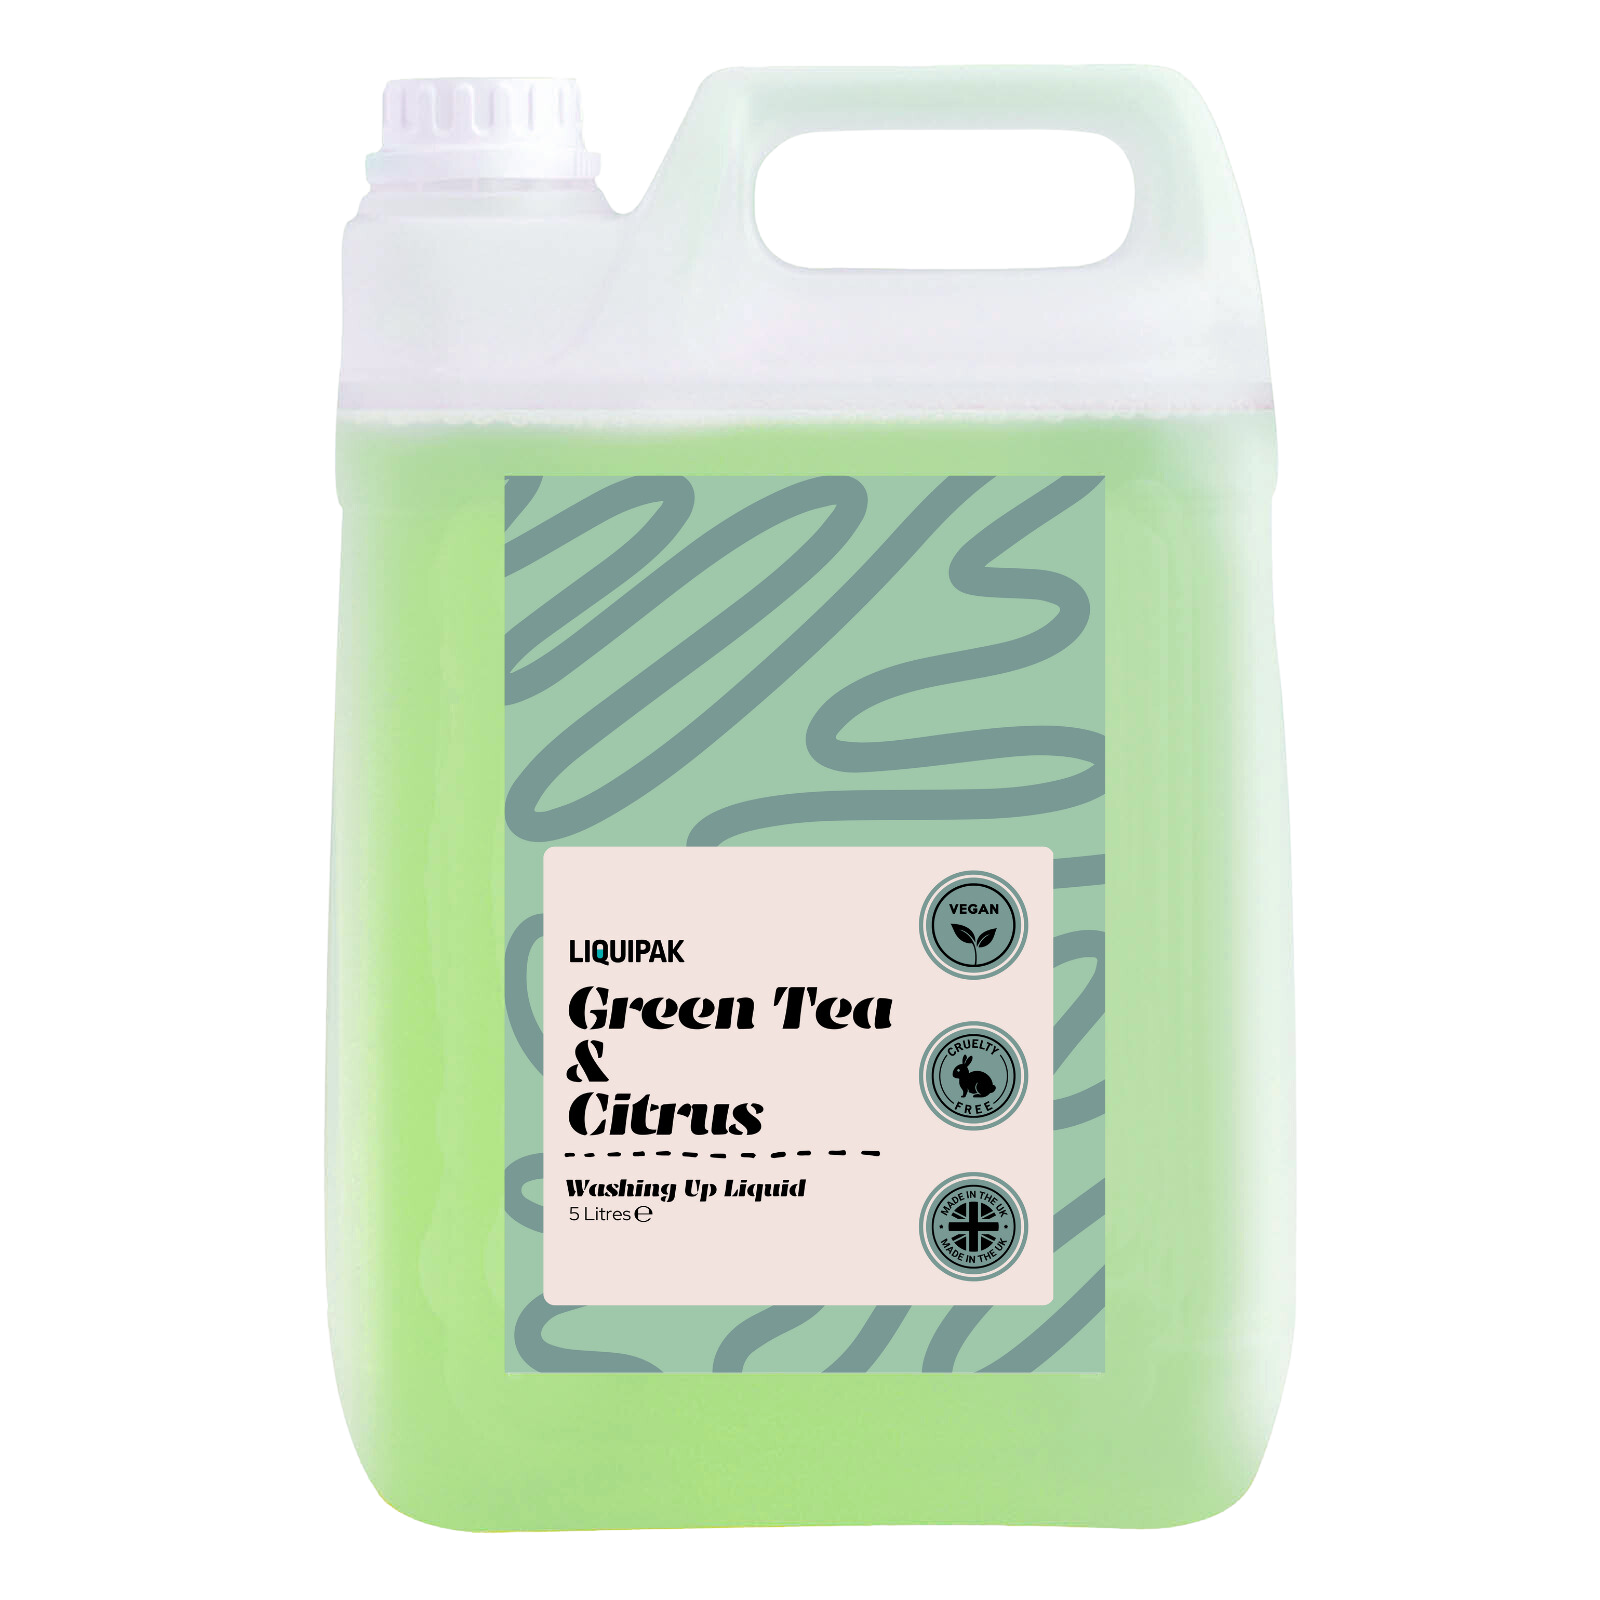 Vegan Washing Up Liquid | Green Tea & Citrus